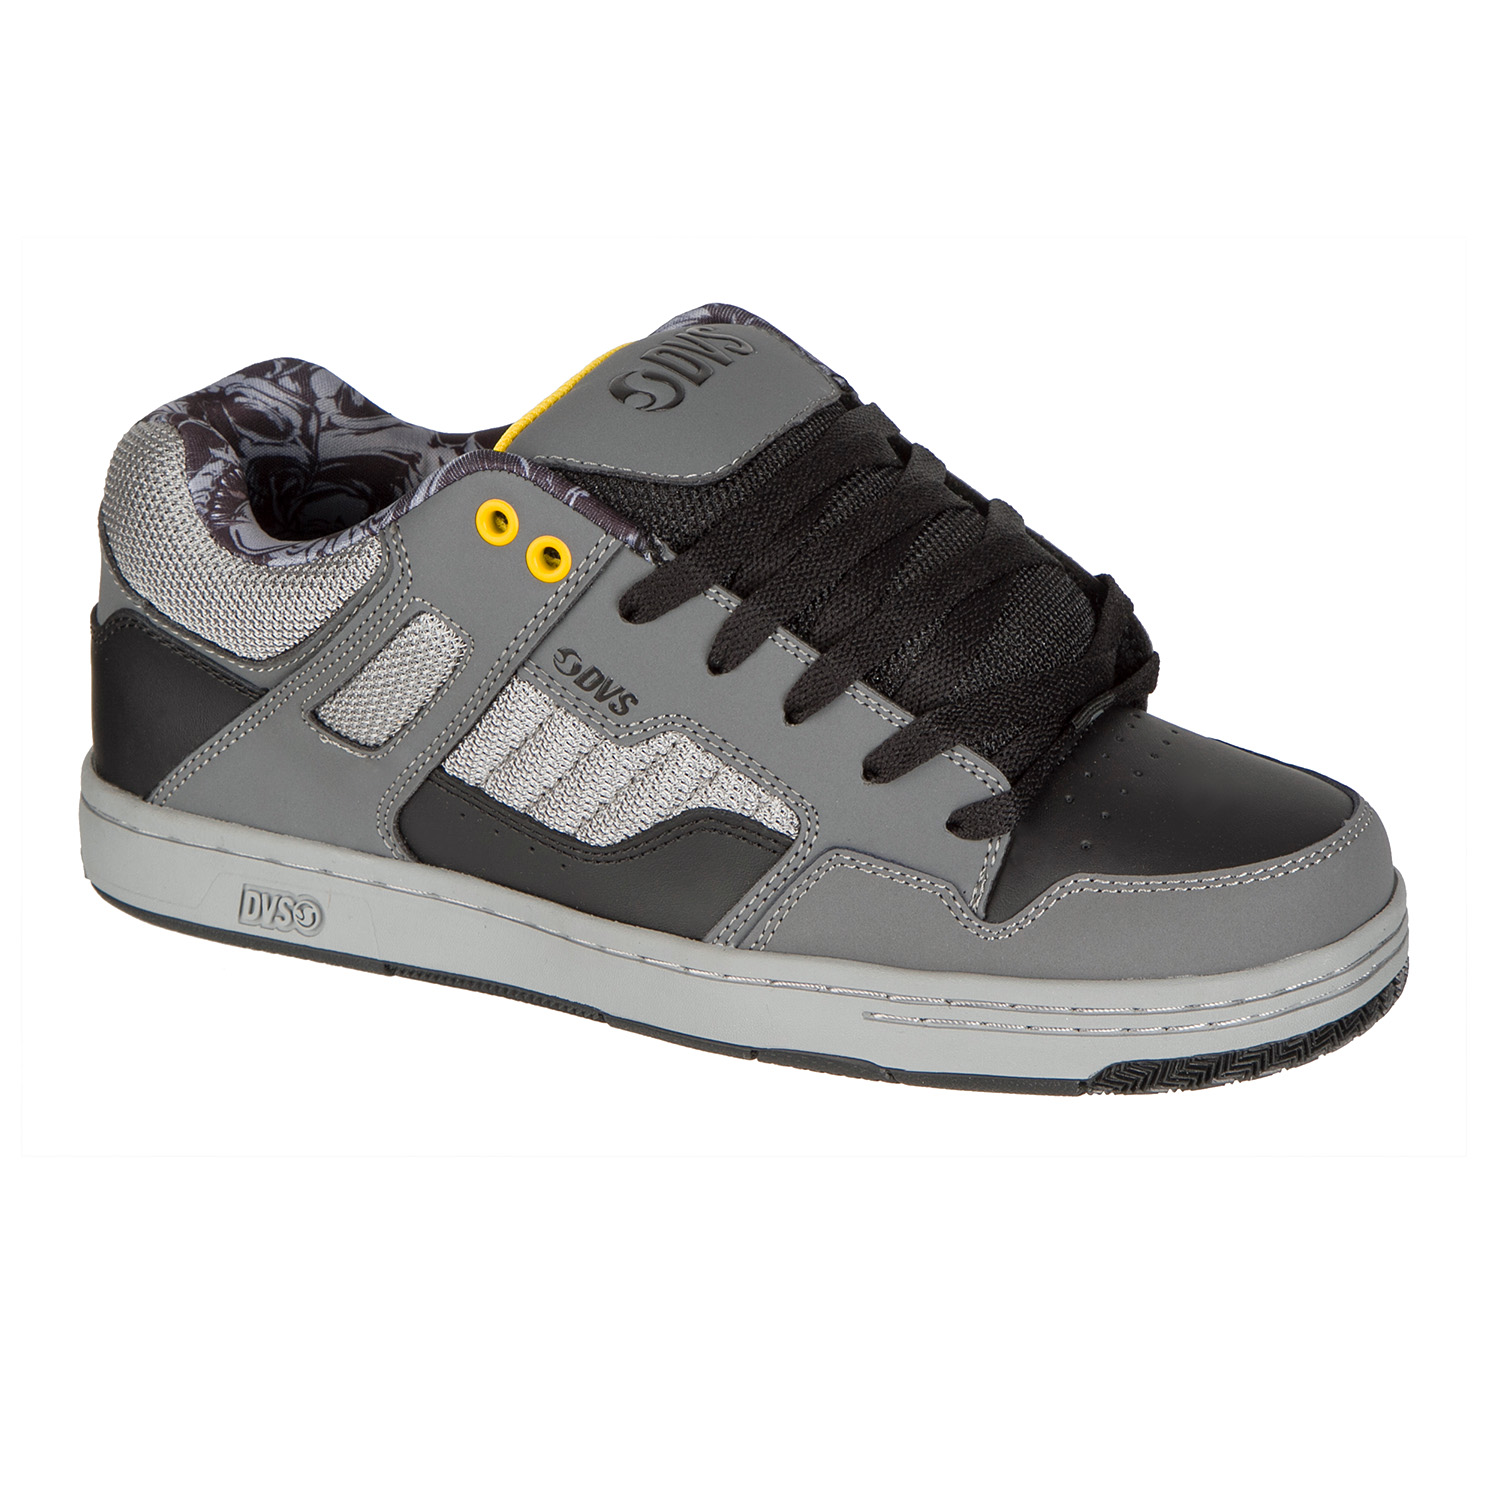 DVS Shoes Enduro 125 Black/Grey/Leather Nubuck Deegan